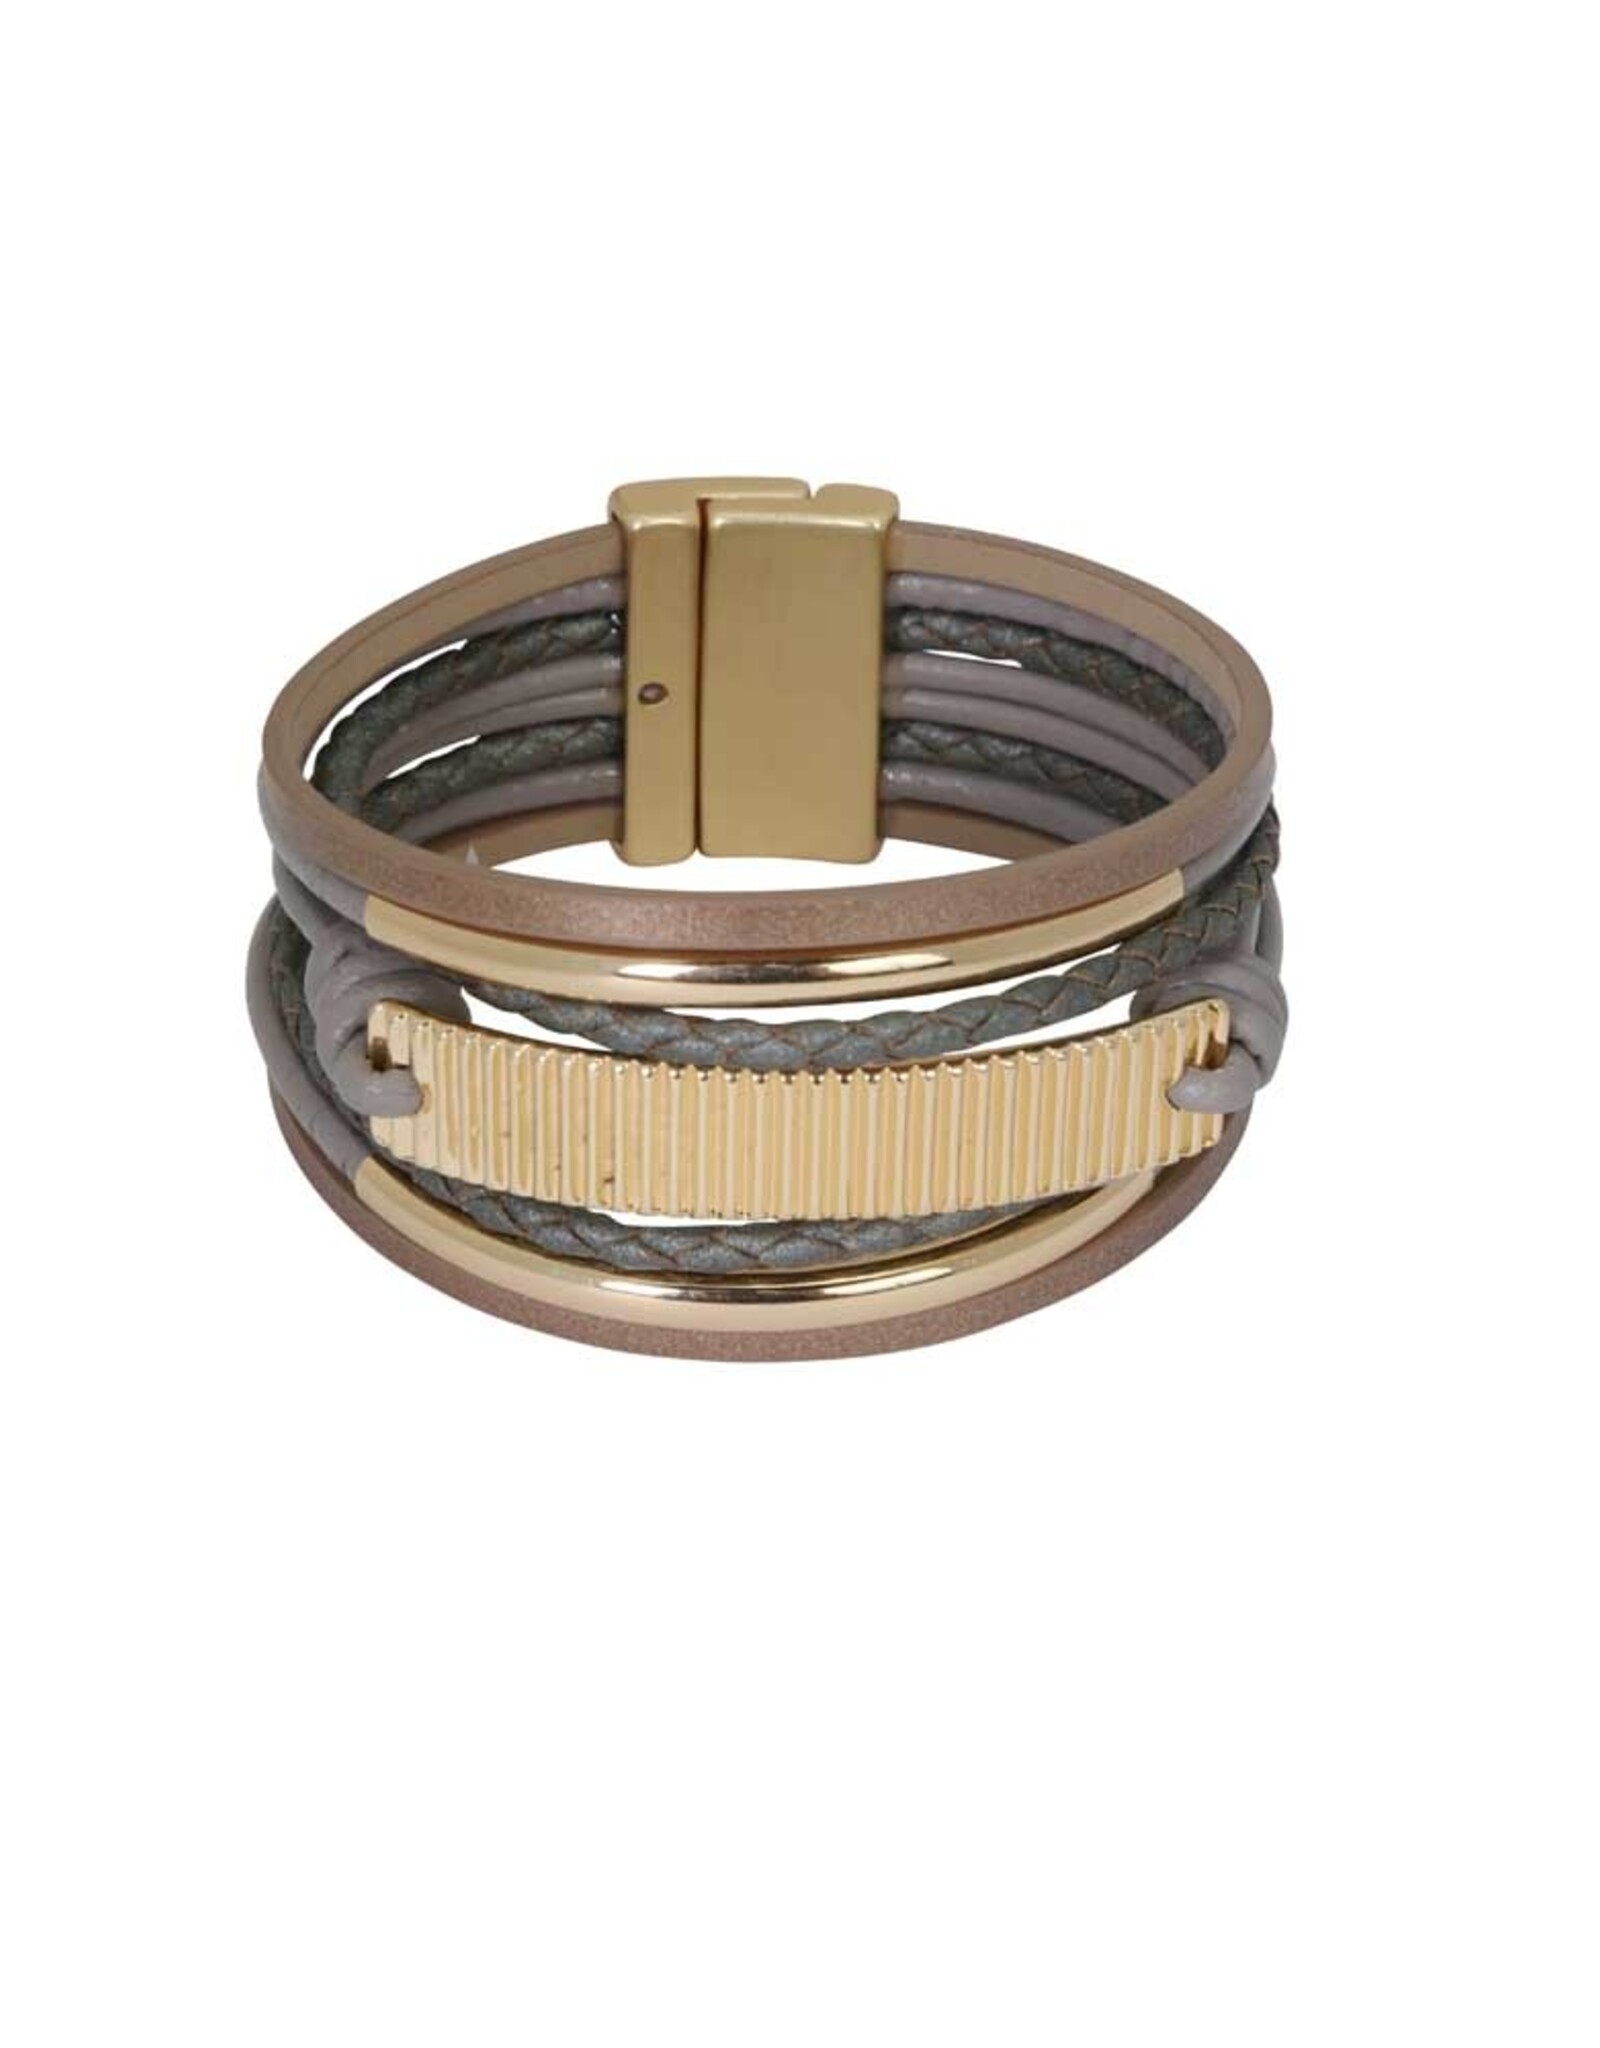 Merx Inc. Merx Fashion Bracelet Shiny Gold + Light Matt KC Gold + Taupe (19cm)